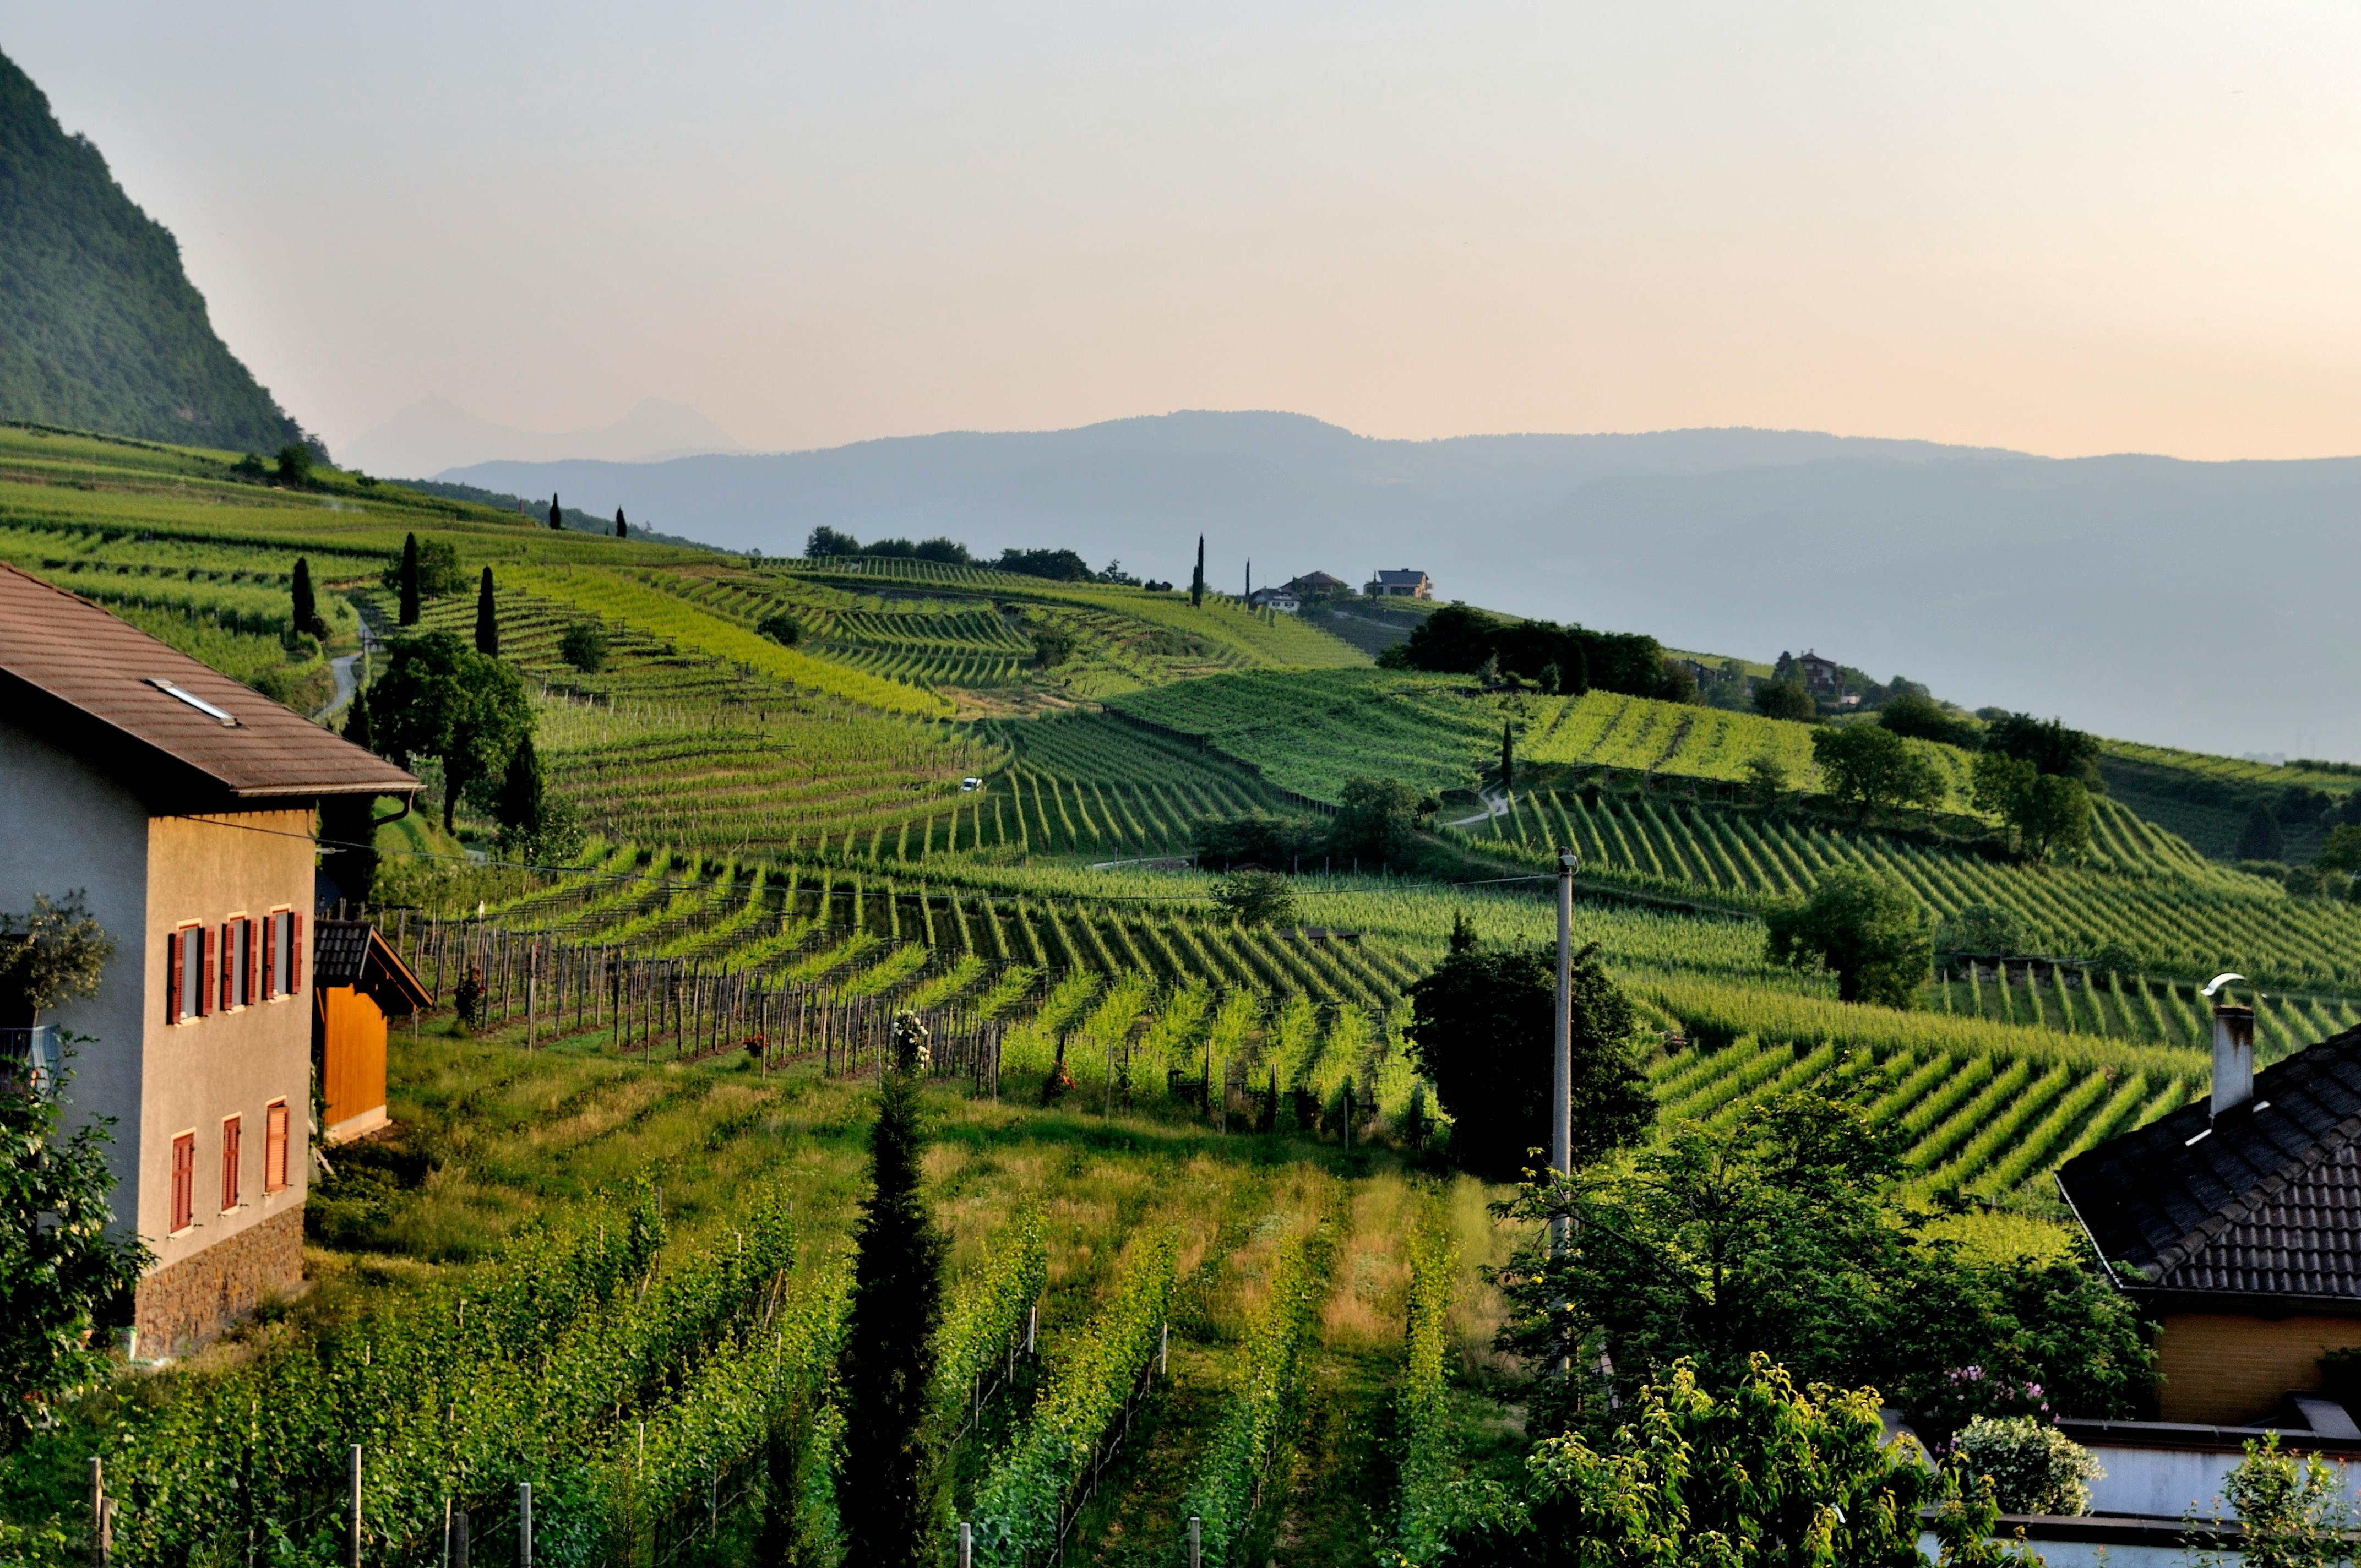 Sustainable Winemaking